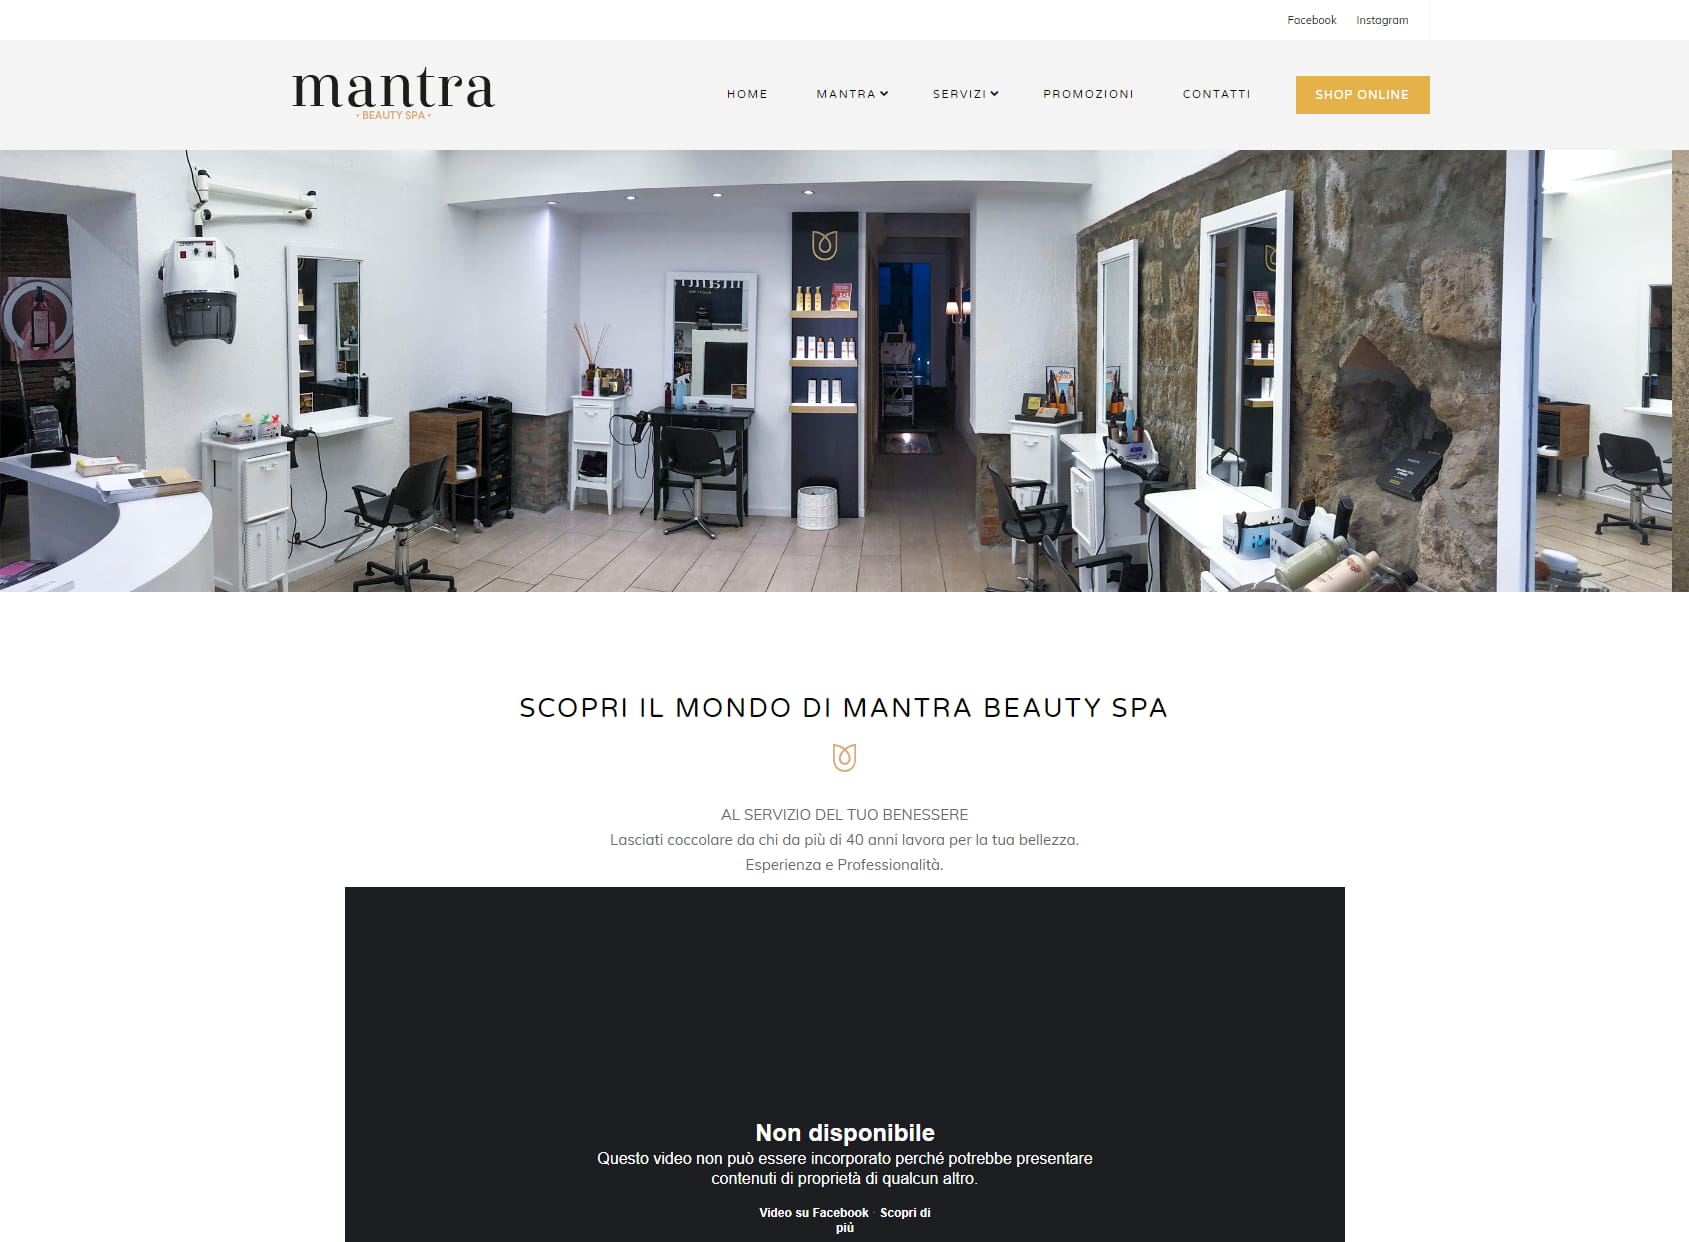 Mantra Beauty SPA